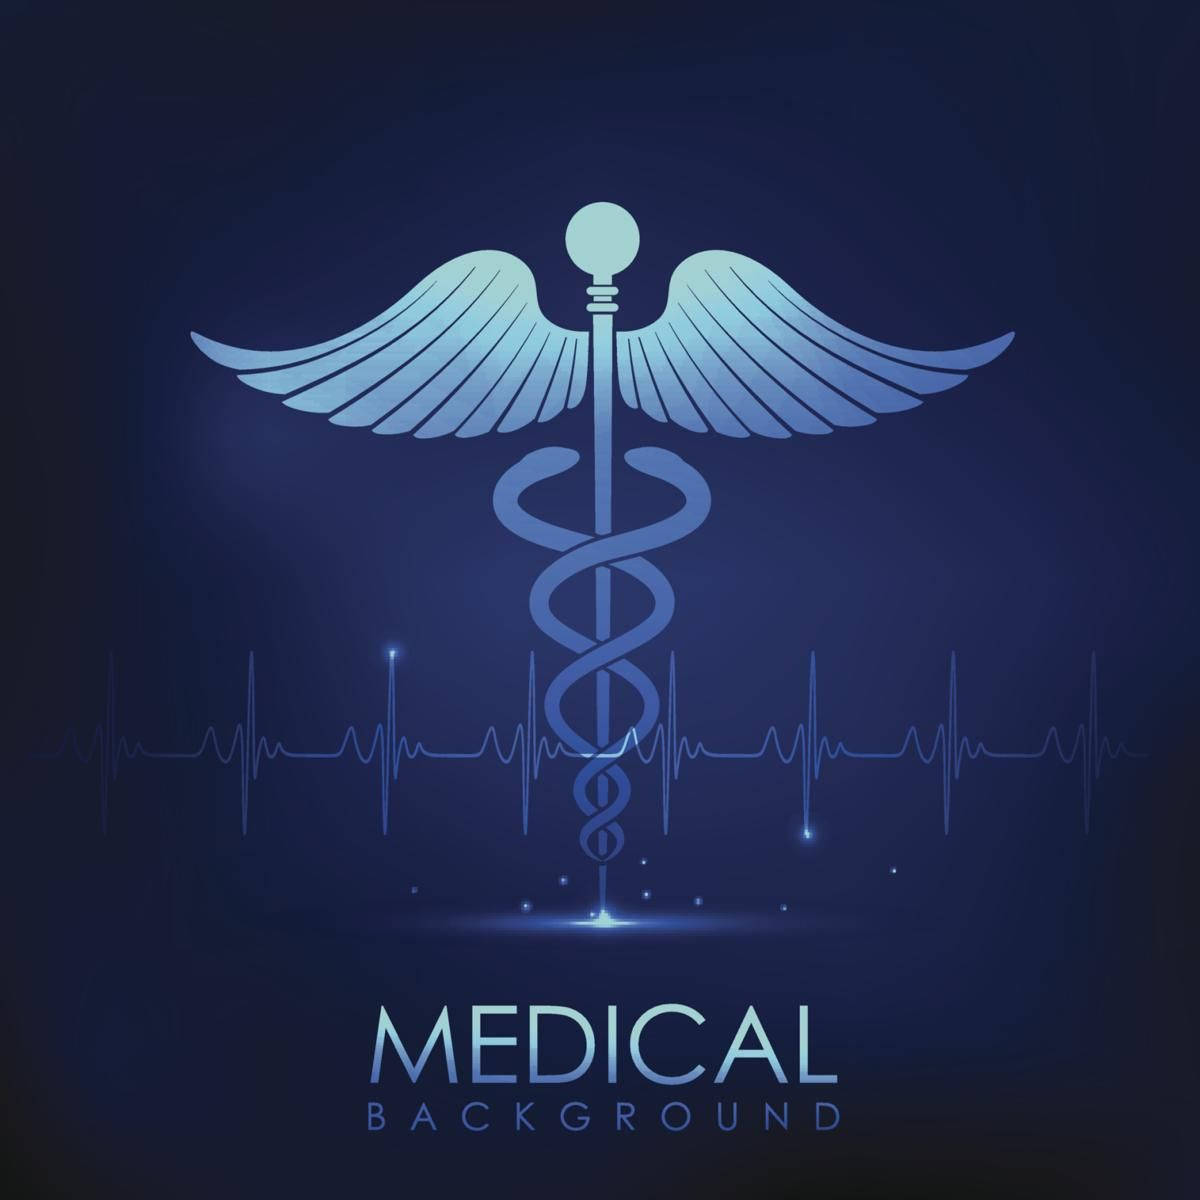 Blue And White Lifeline Medical Symbol